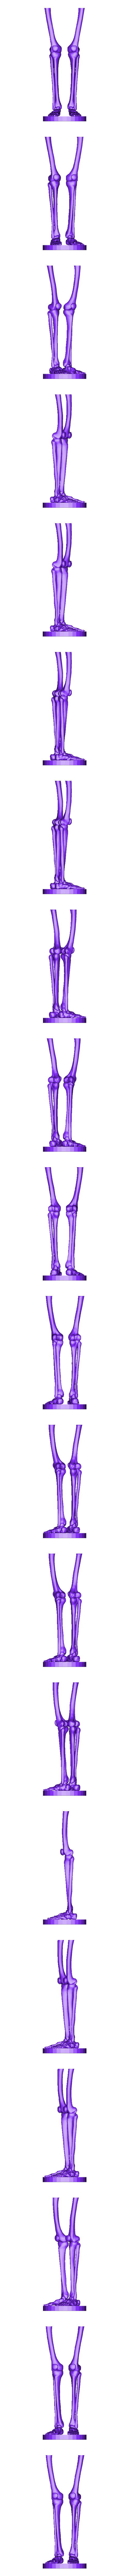 limbs_skel.stl Descargar archivo STL gratis Esqueleto humano • Modelo para la impresora 3D, Cornbald